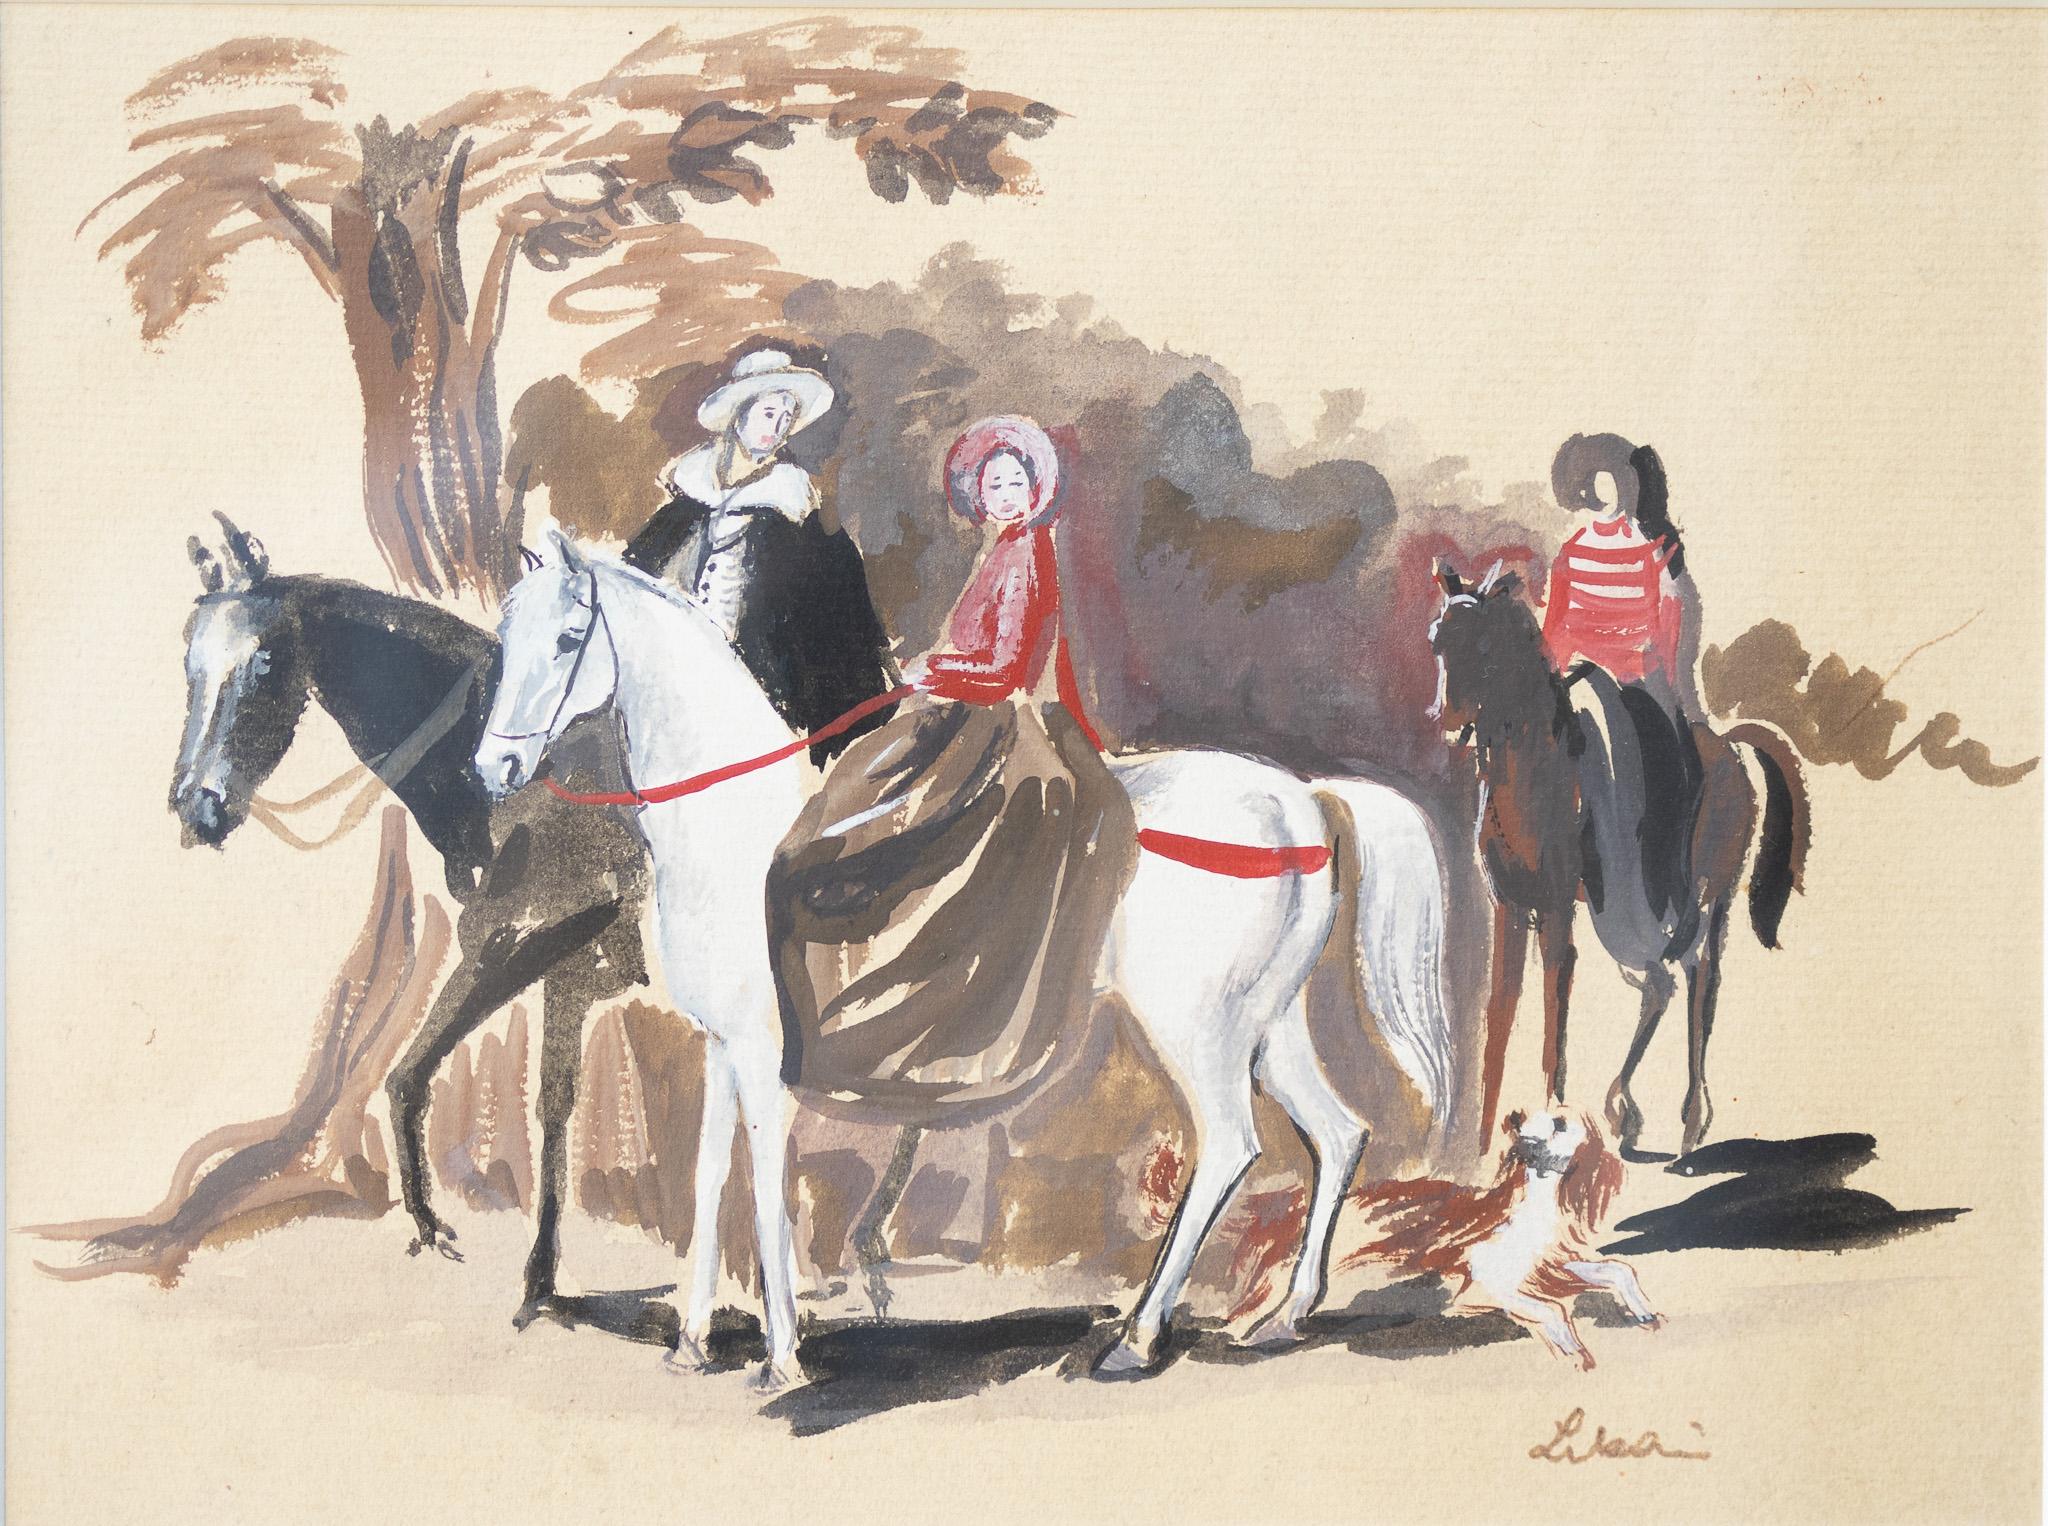 Figurative Painting Gustav Likan - « People on Horseback », croquis mural d'Eva Peron